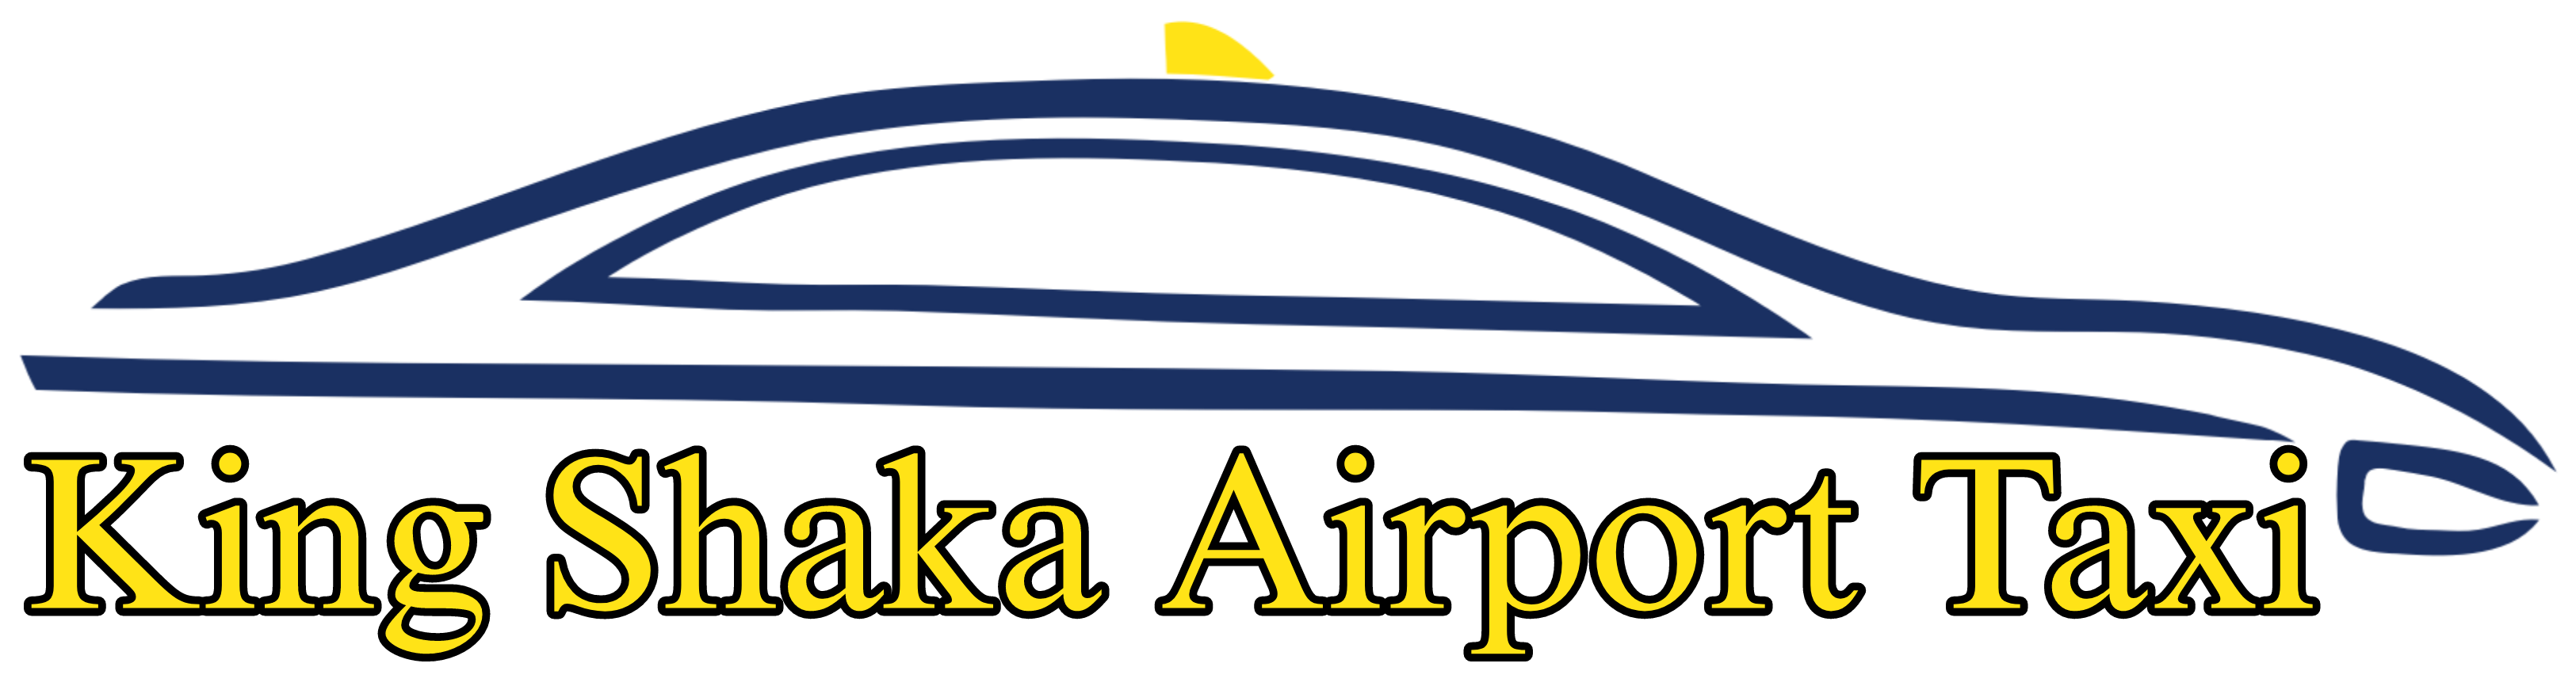 King Shaka Airport Taxi Logo